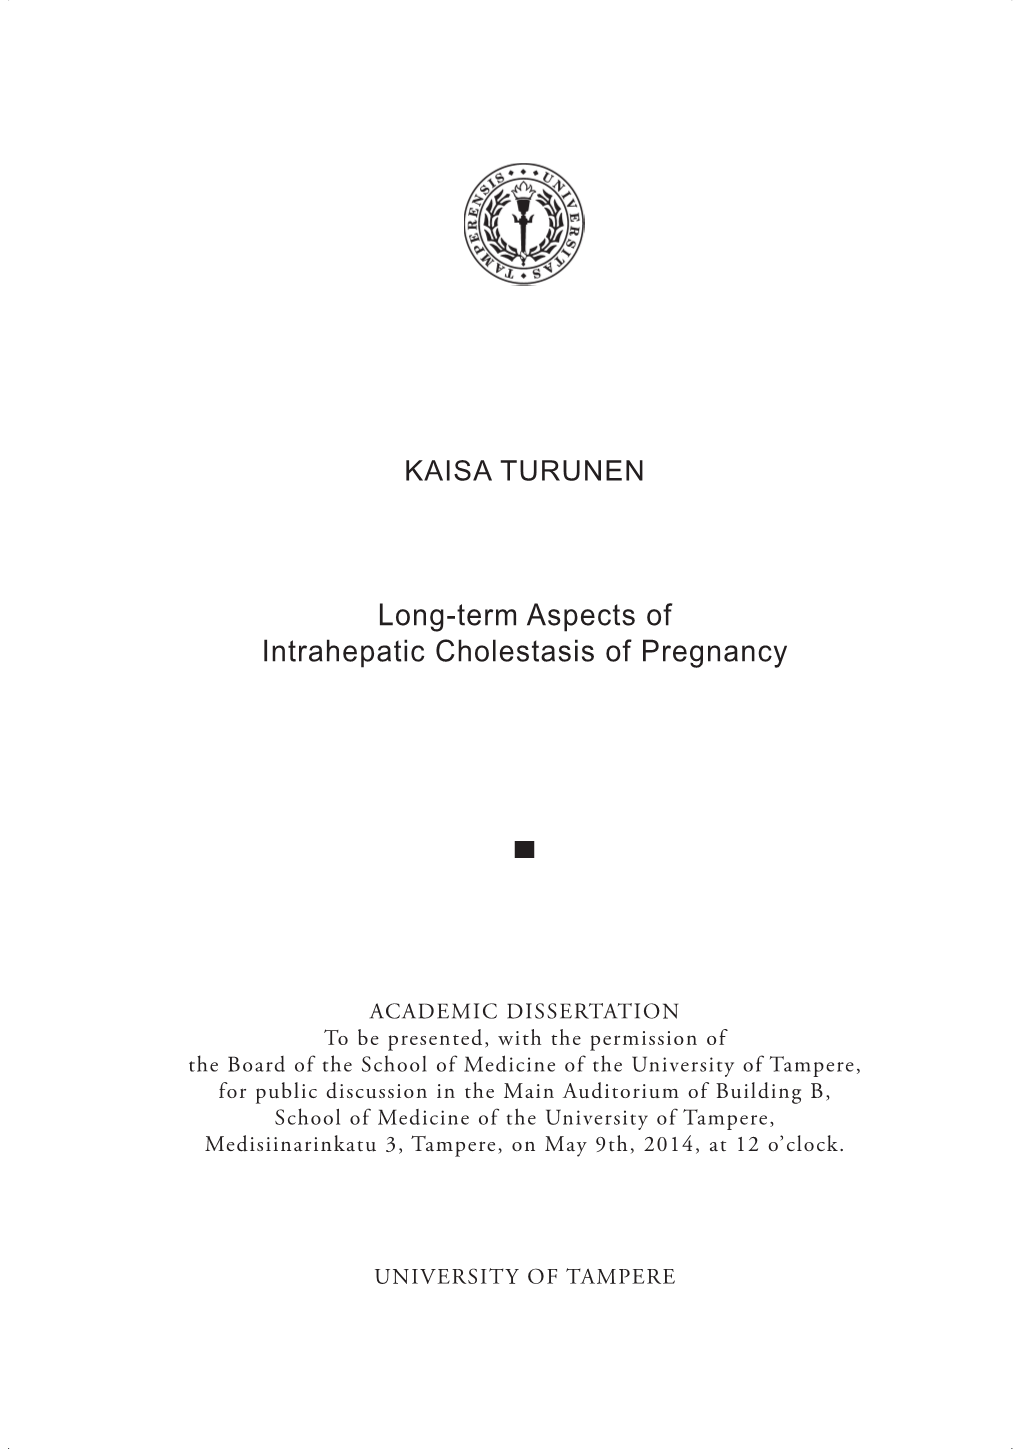 Long-Term Aspects of Intrahepatic Cholestasis of Pregnancy